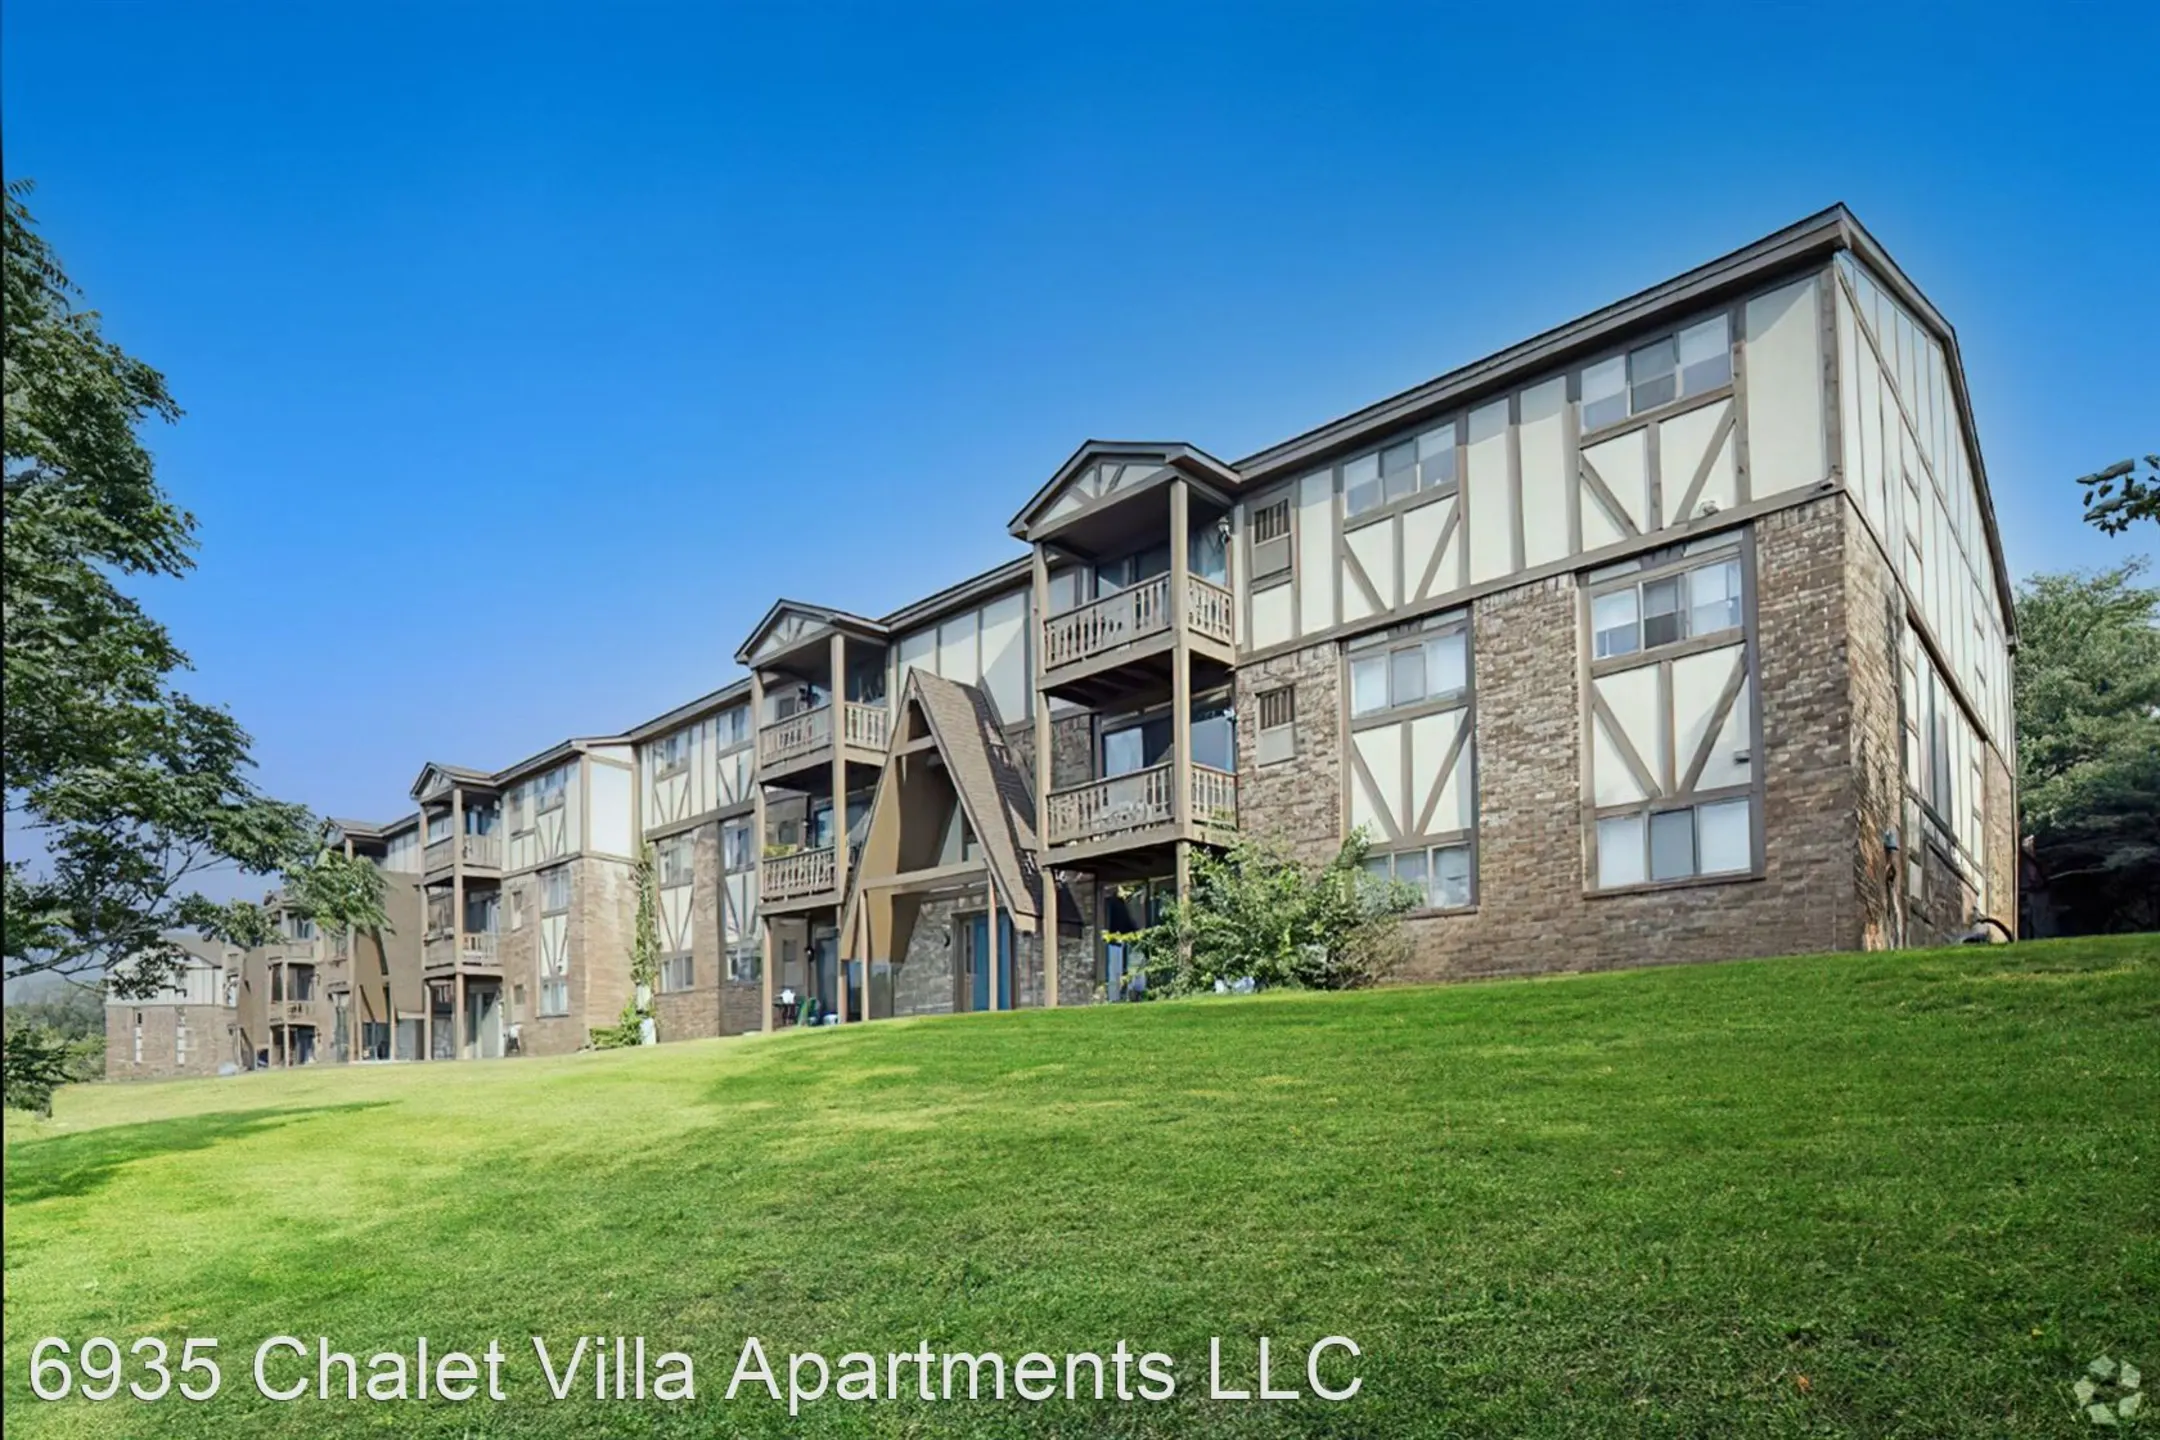 Building - Chalet Villa Apartments - Clarkston, MI